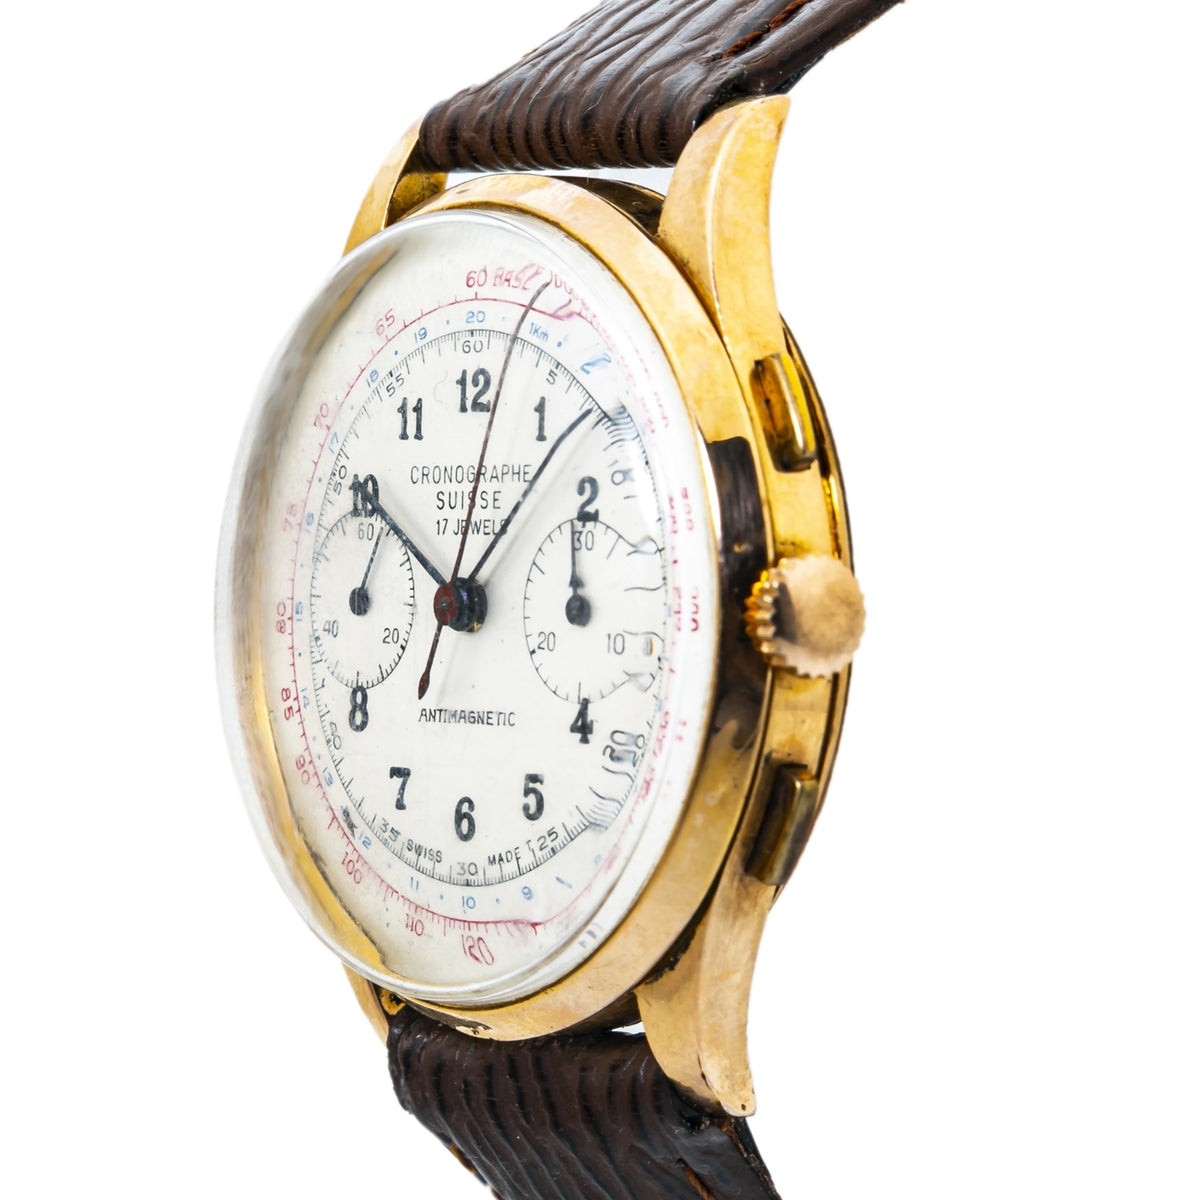 Chronographe Suisse 140 Vintage Chronograph 18K Rose Gold Men's Watch 38mm